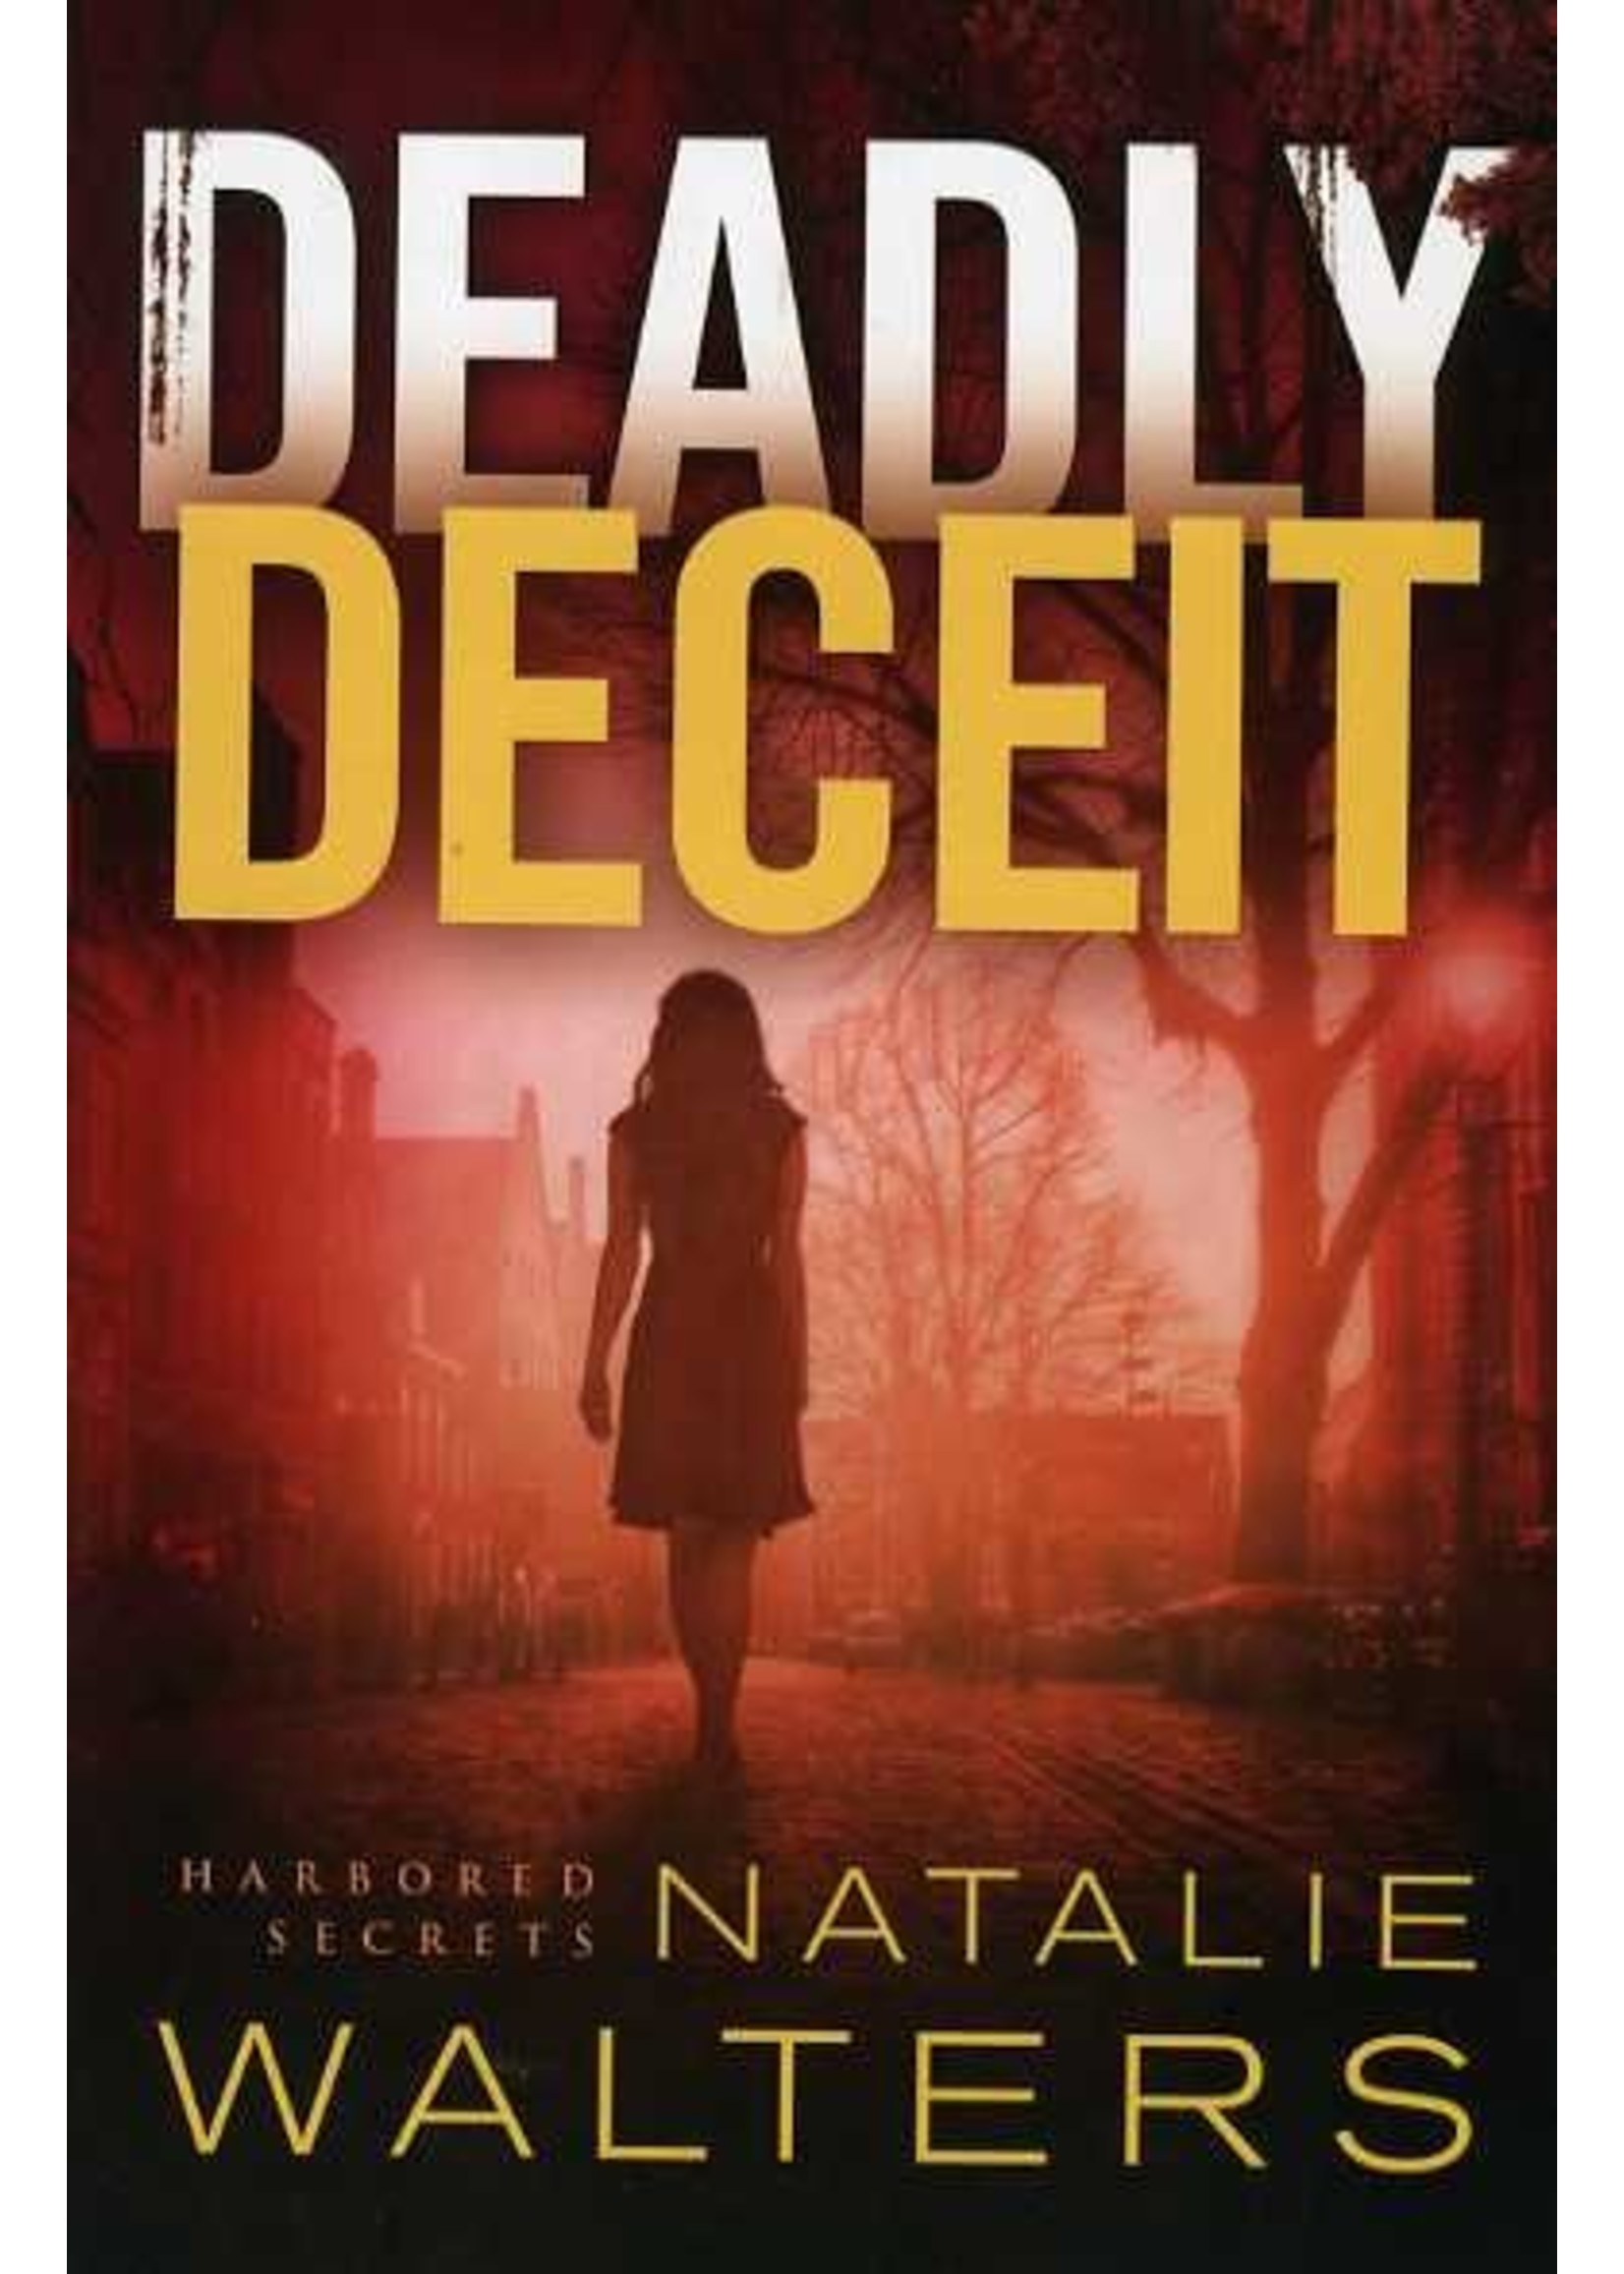 Revell Deadly Deceit (Harbored Secrets 2) - Natalie Walters